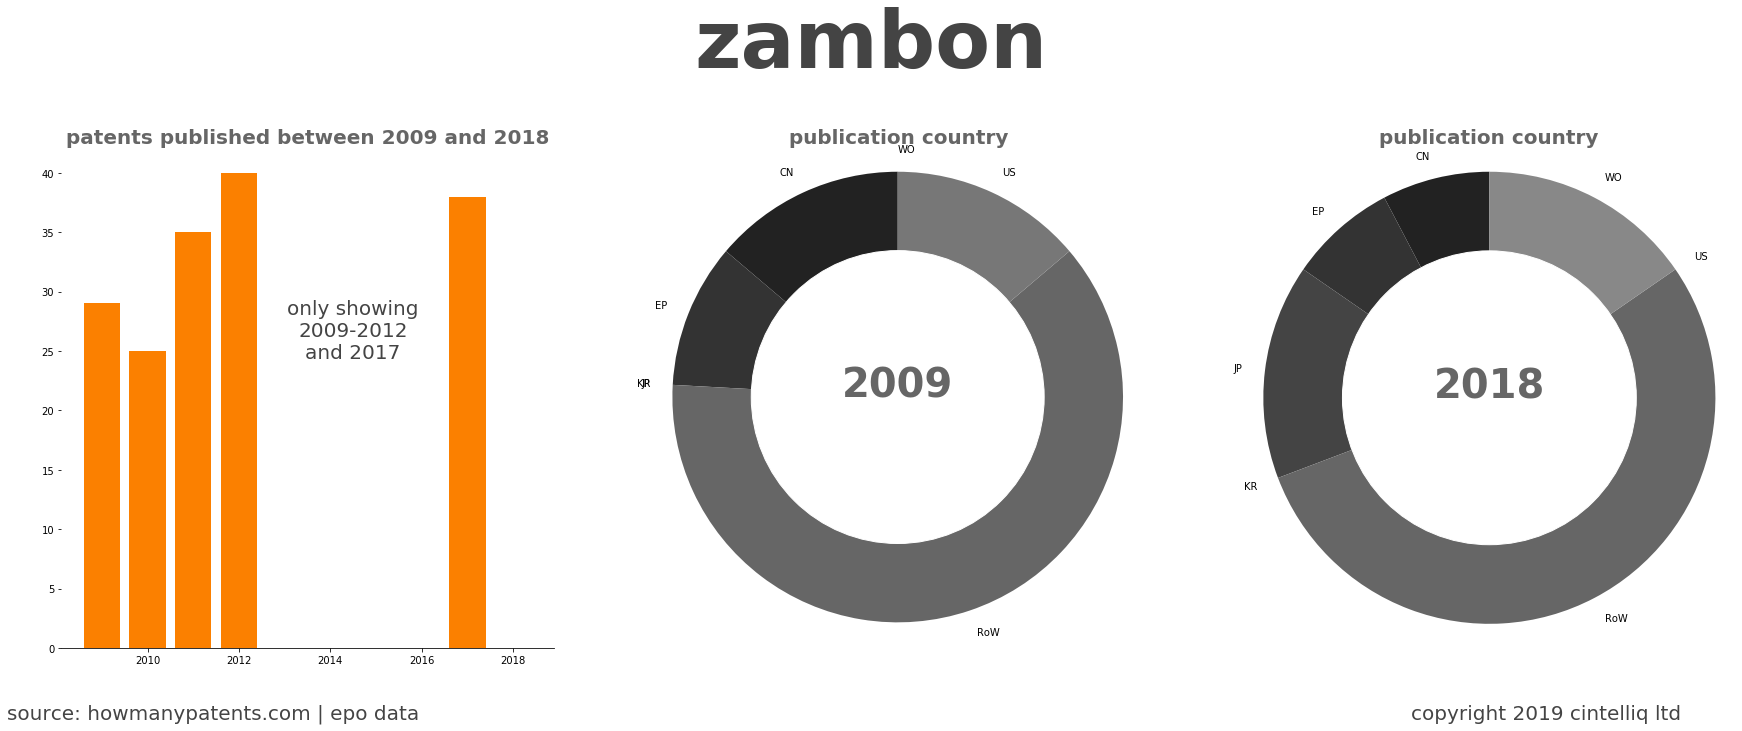 summary of patents for Zambon